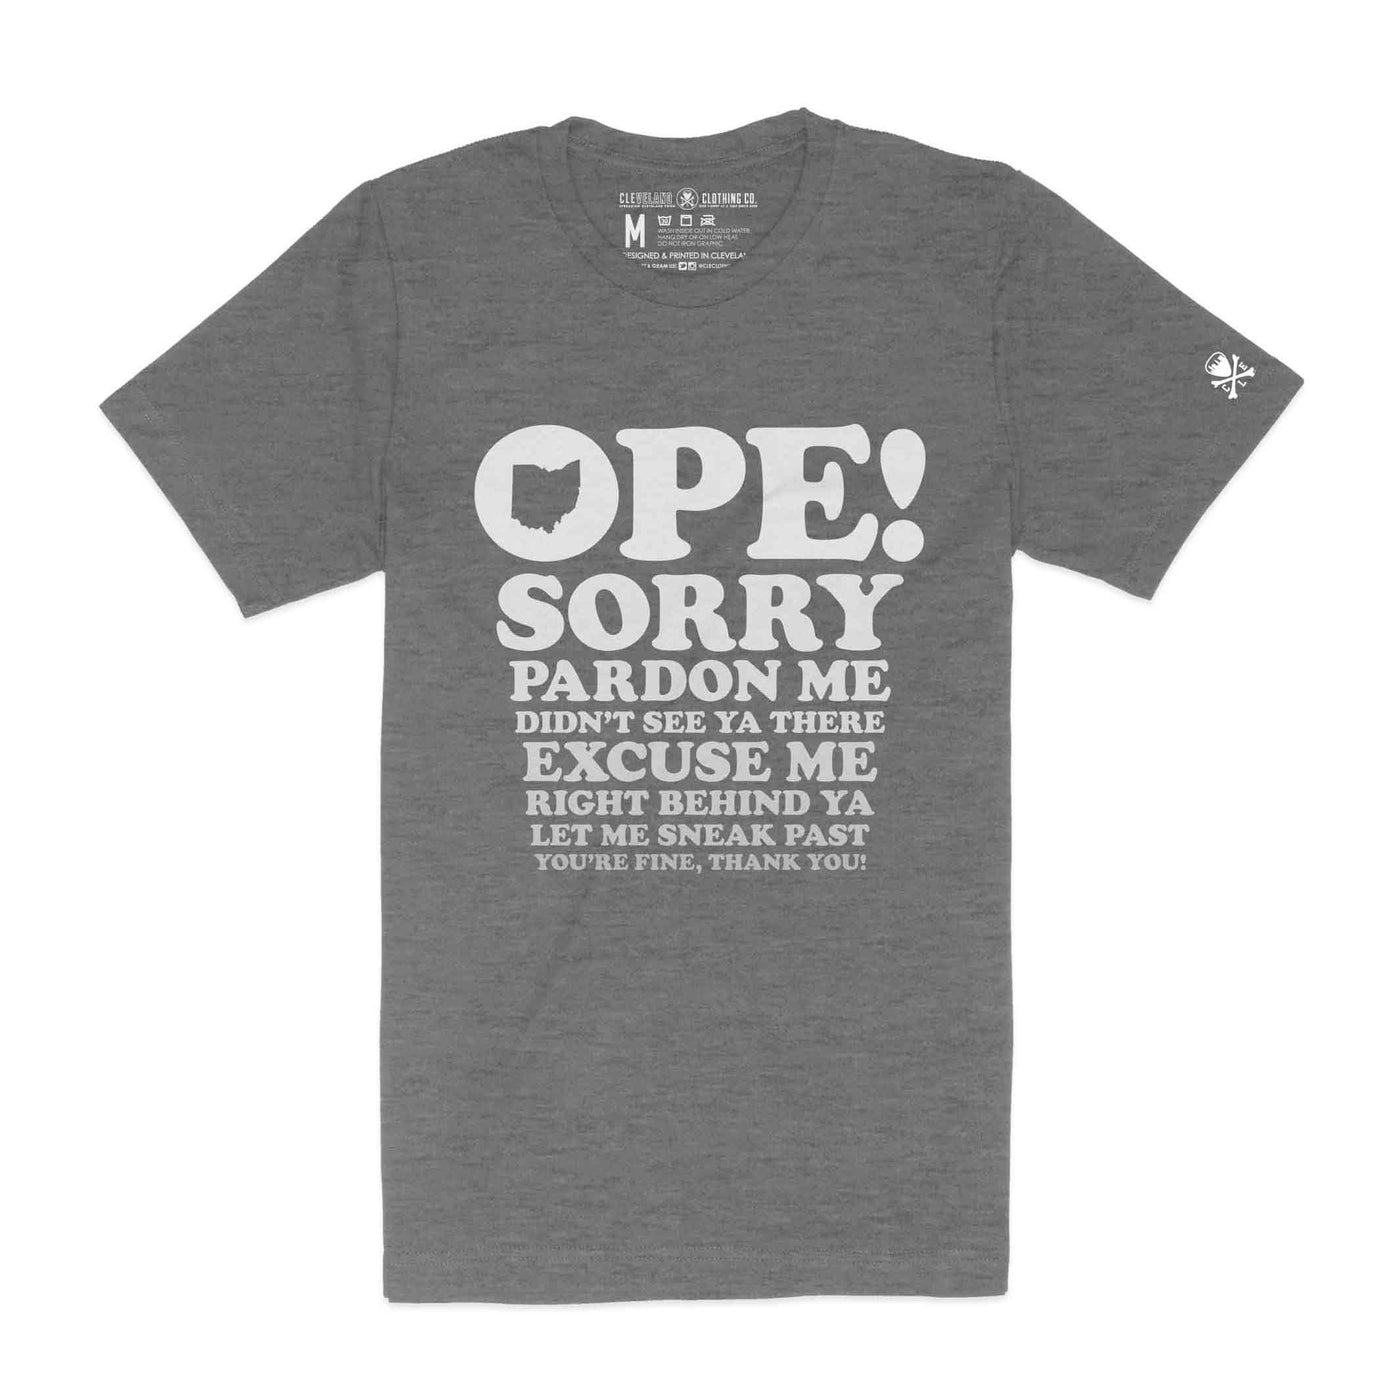 Ope! Unisex Crew T-Shirt